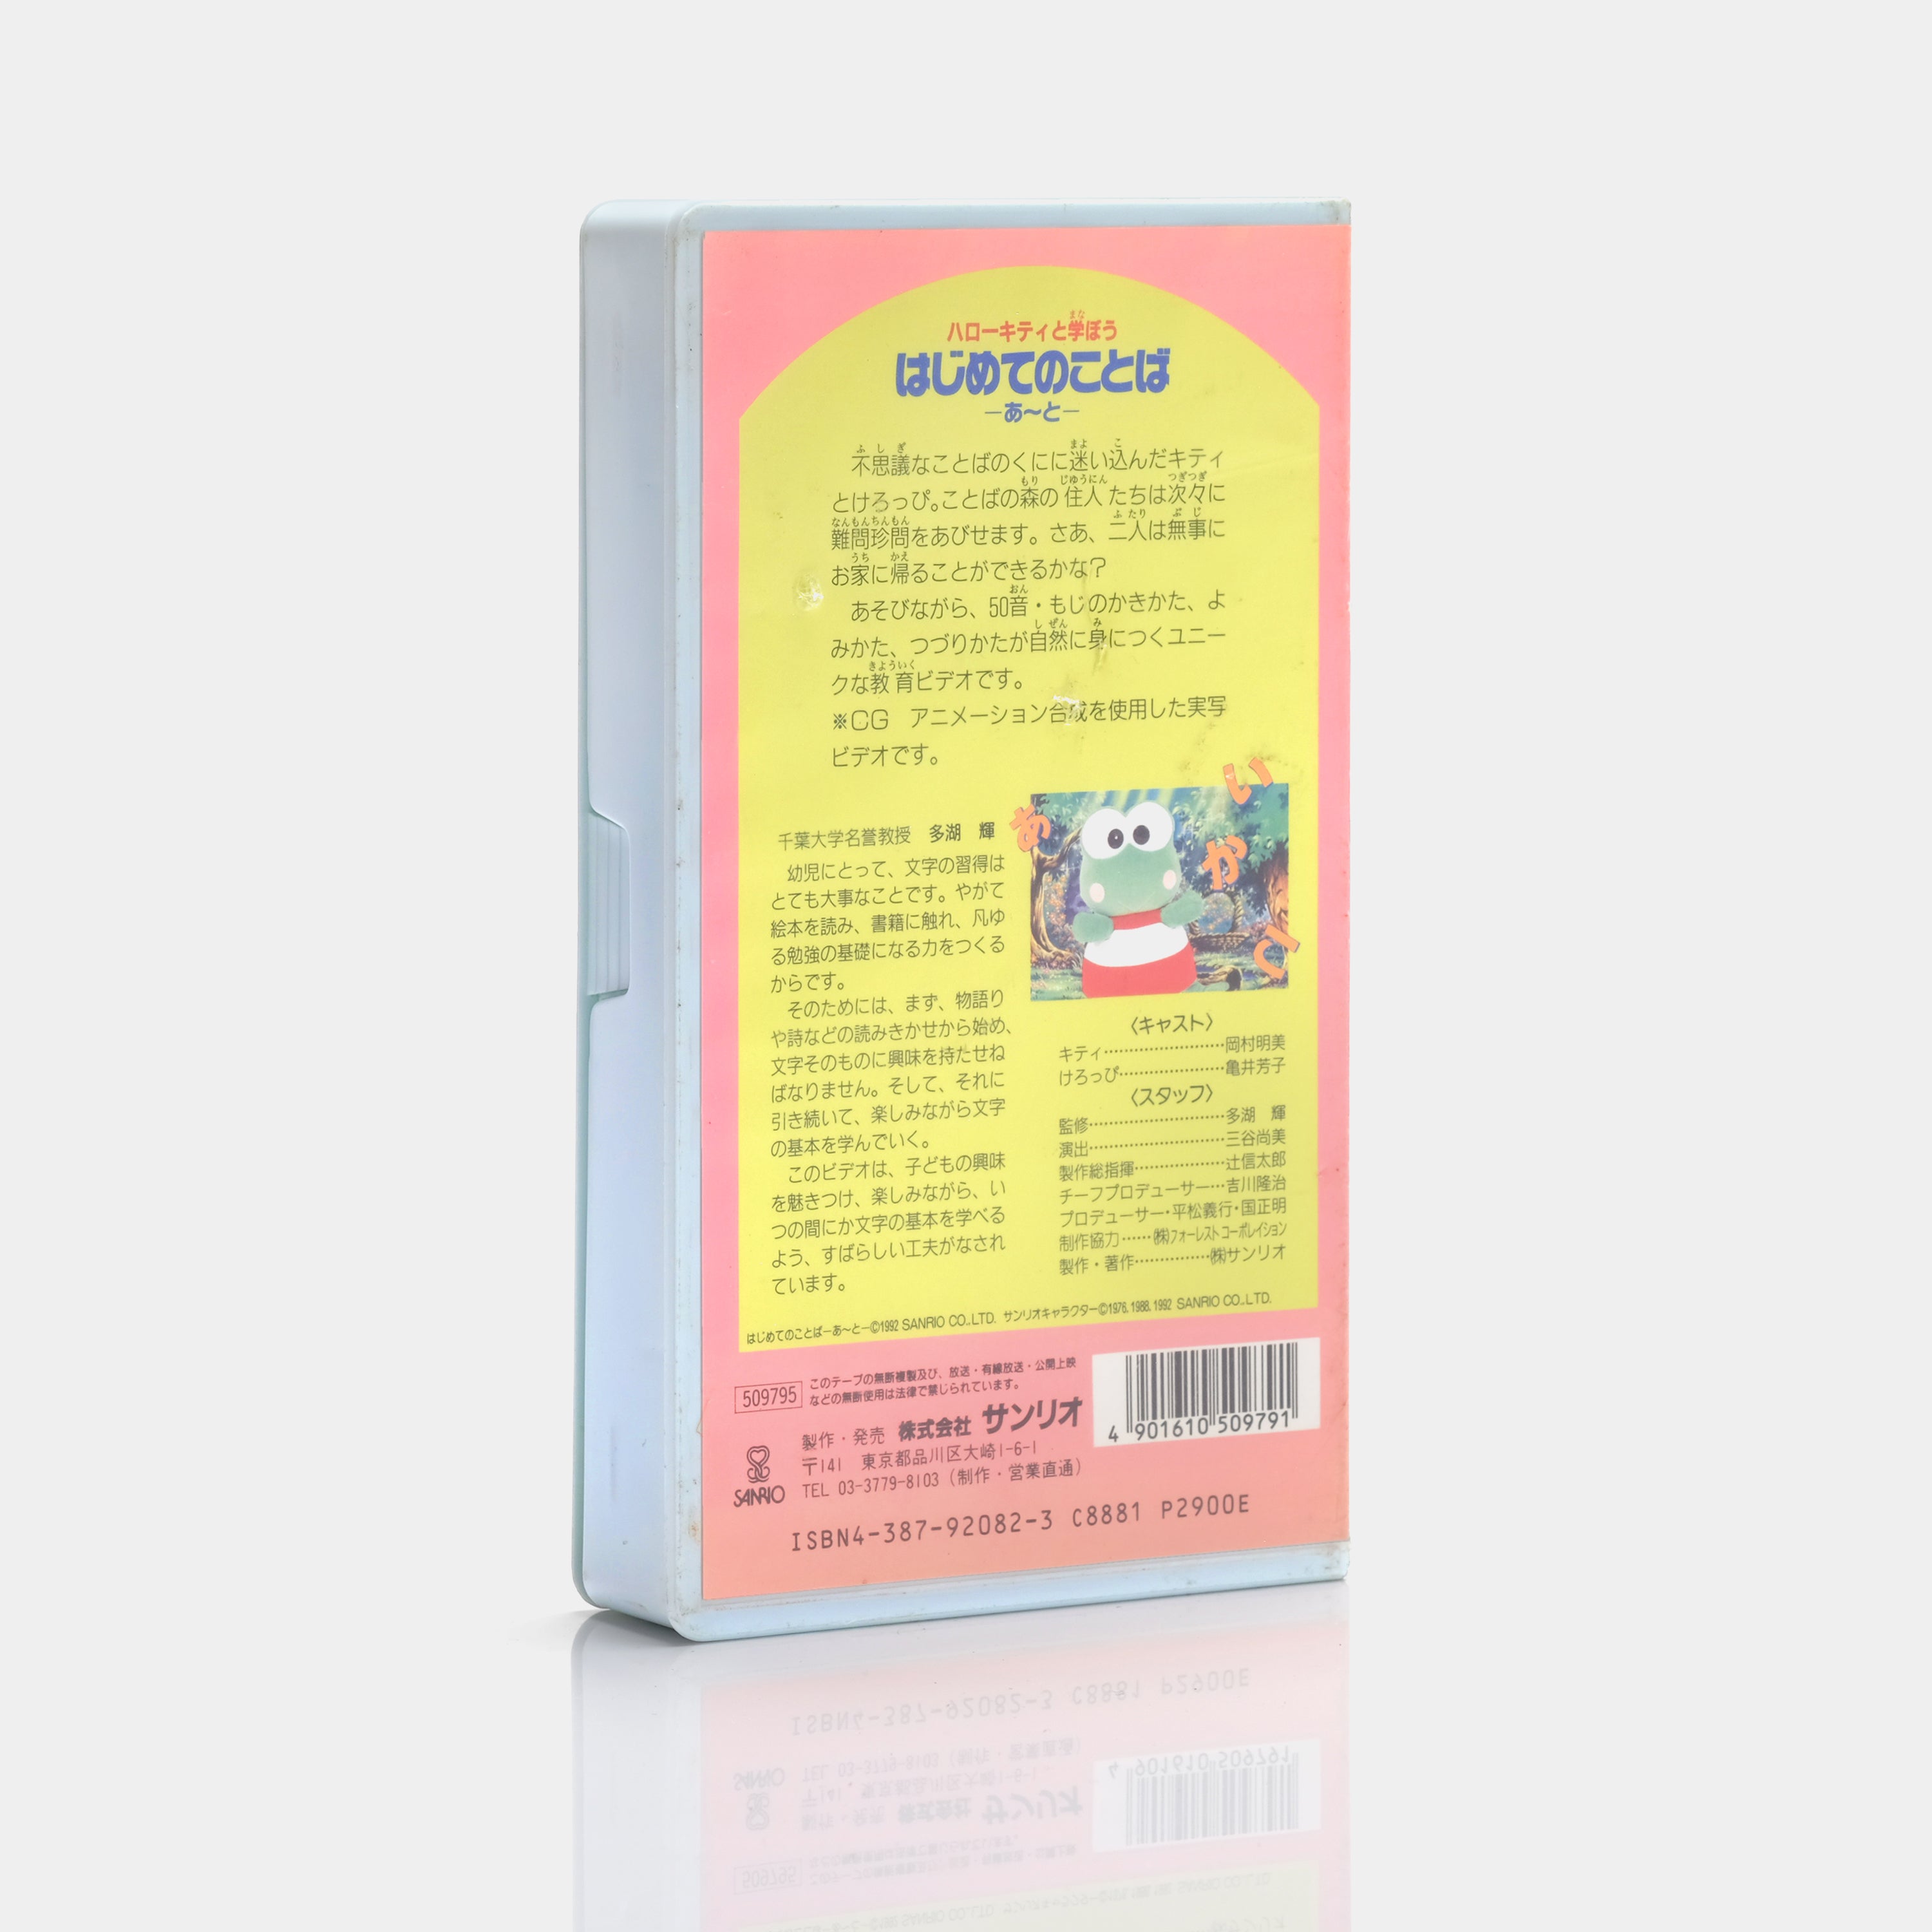 Sanrio Brain Development Video: Learn with Hello Kitty VHS Tape